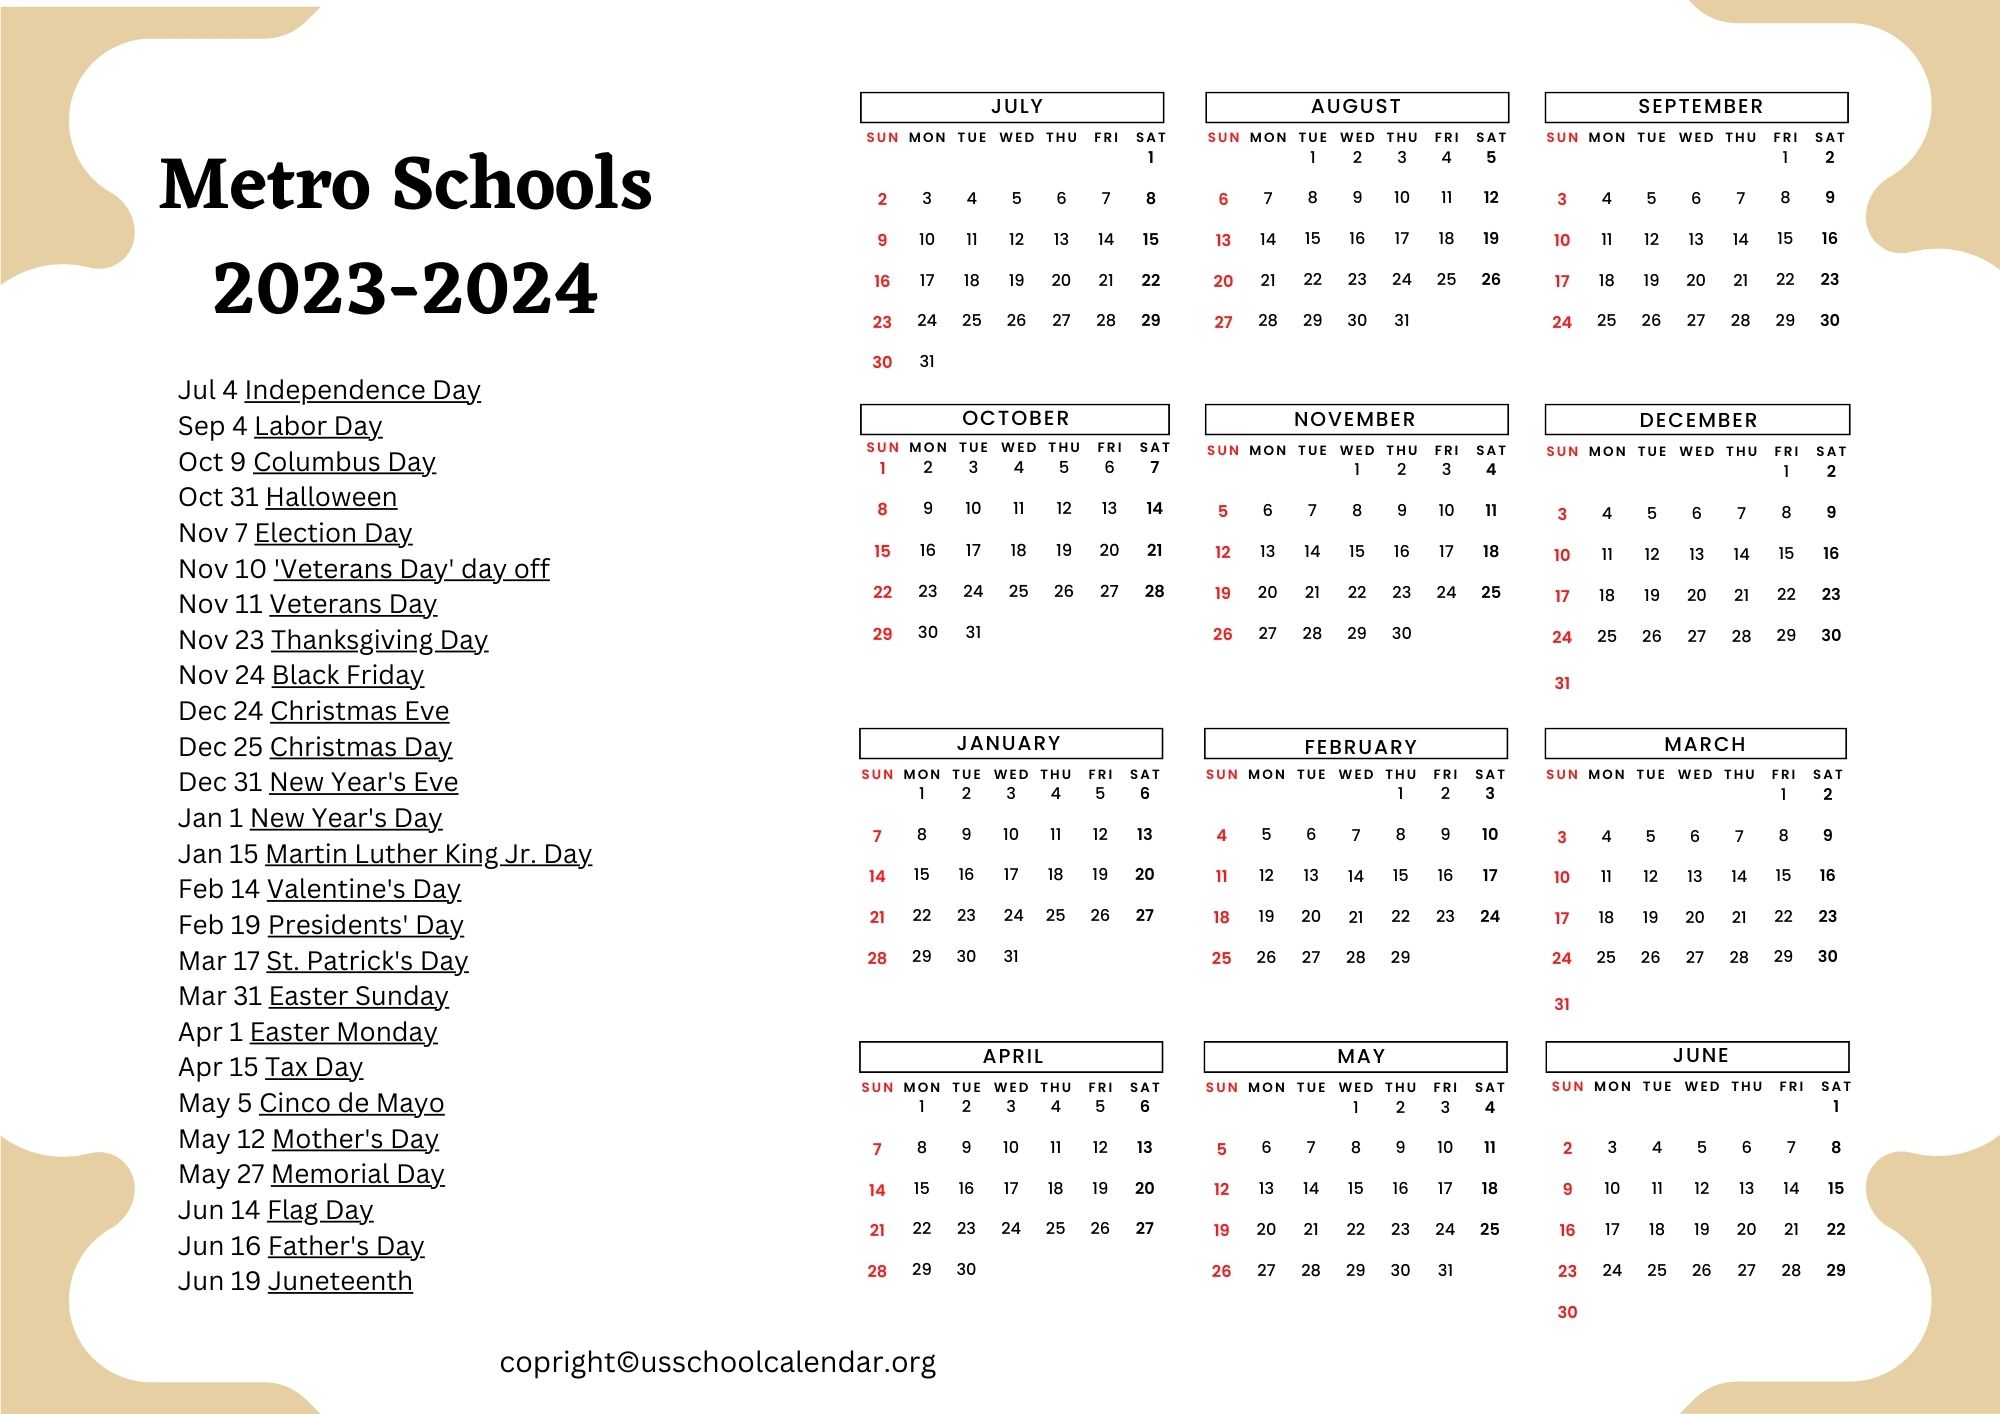 Metro Schools Calendar with Holidays 2023 2024